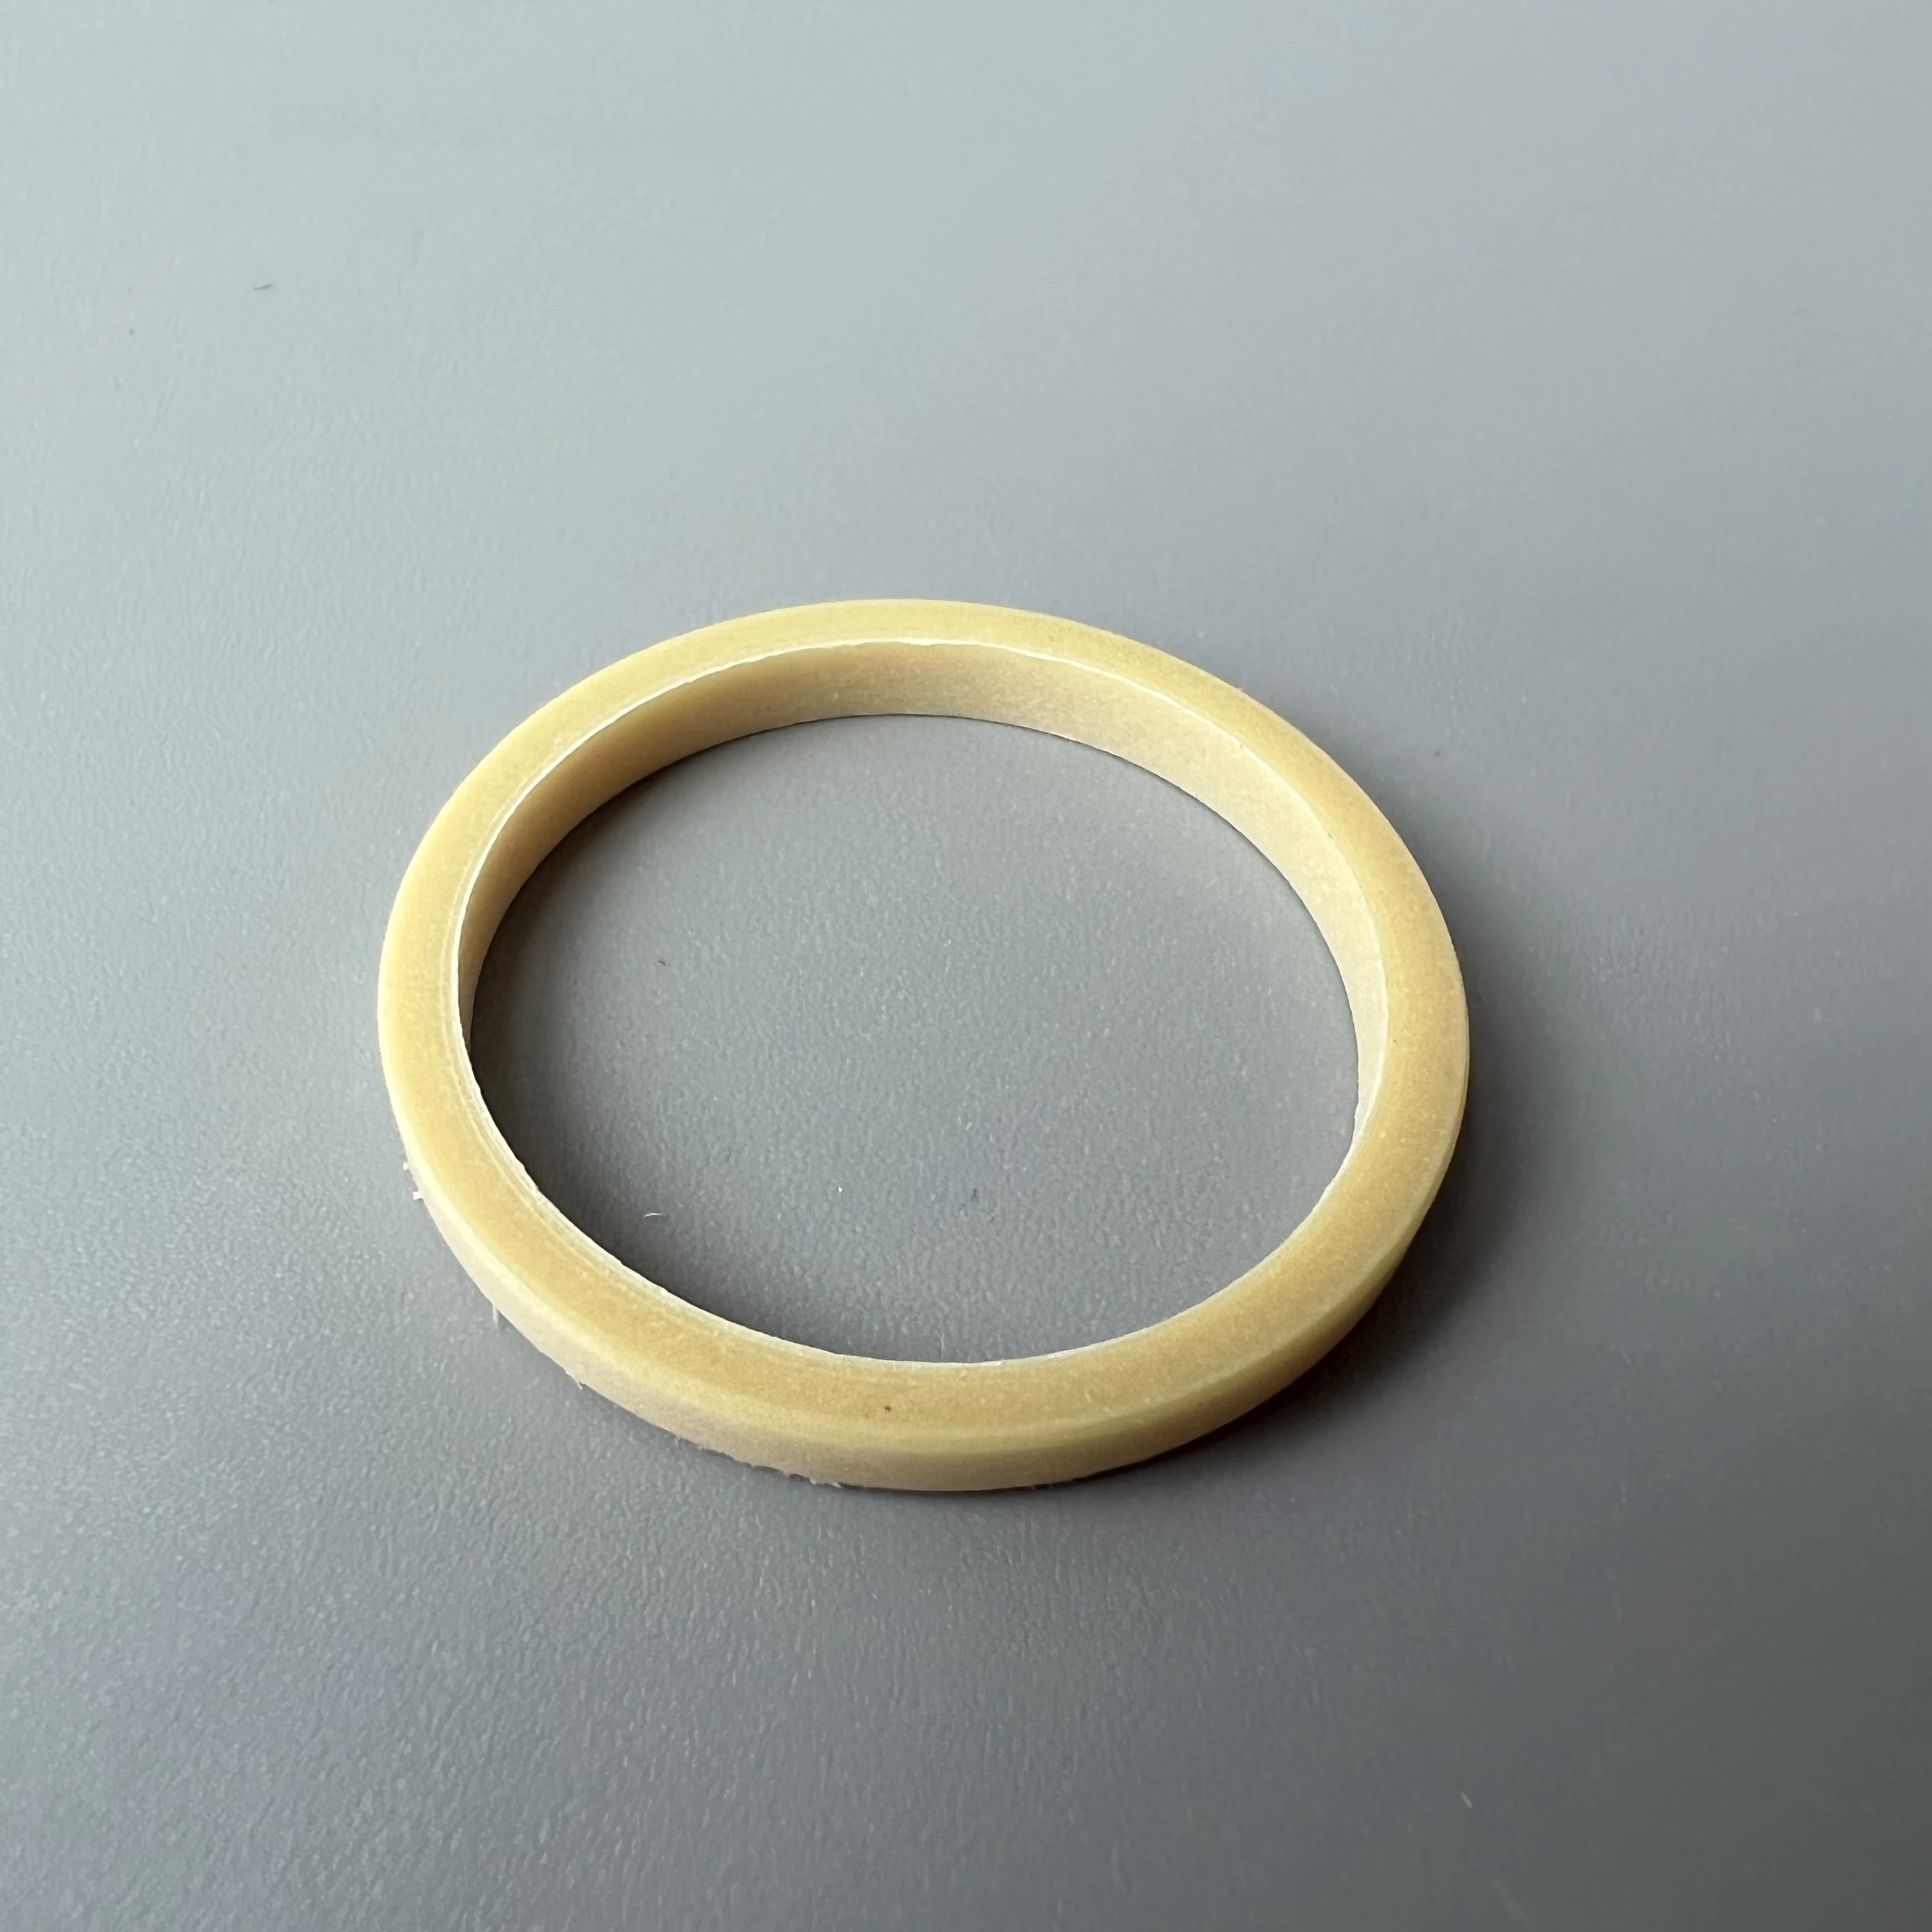 Original Noritsu Block ring H153721 H153721-00 for LPS24 minilab